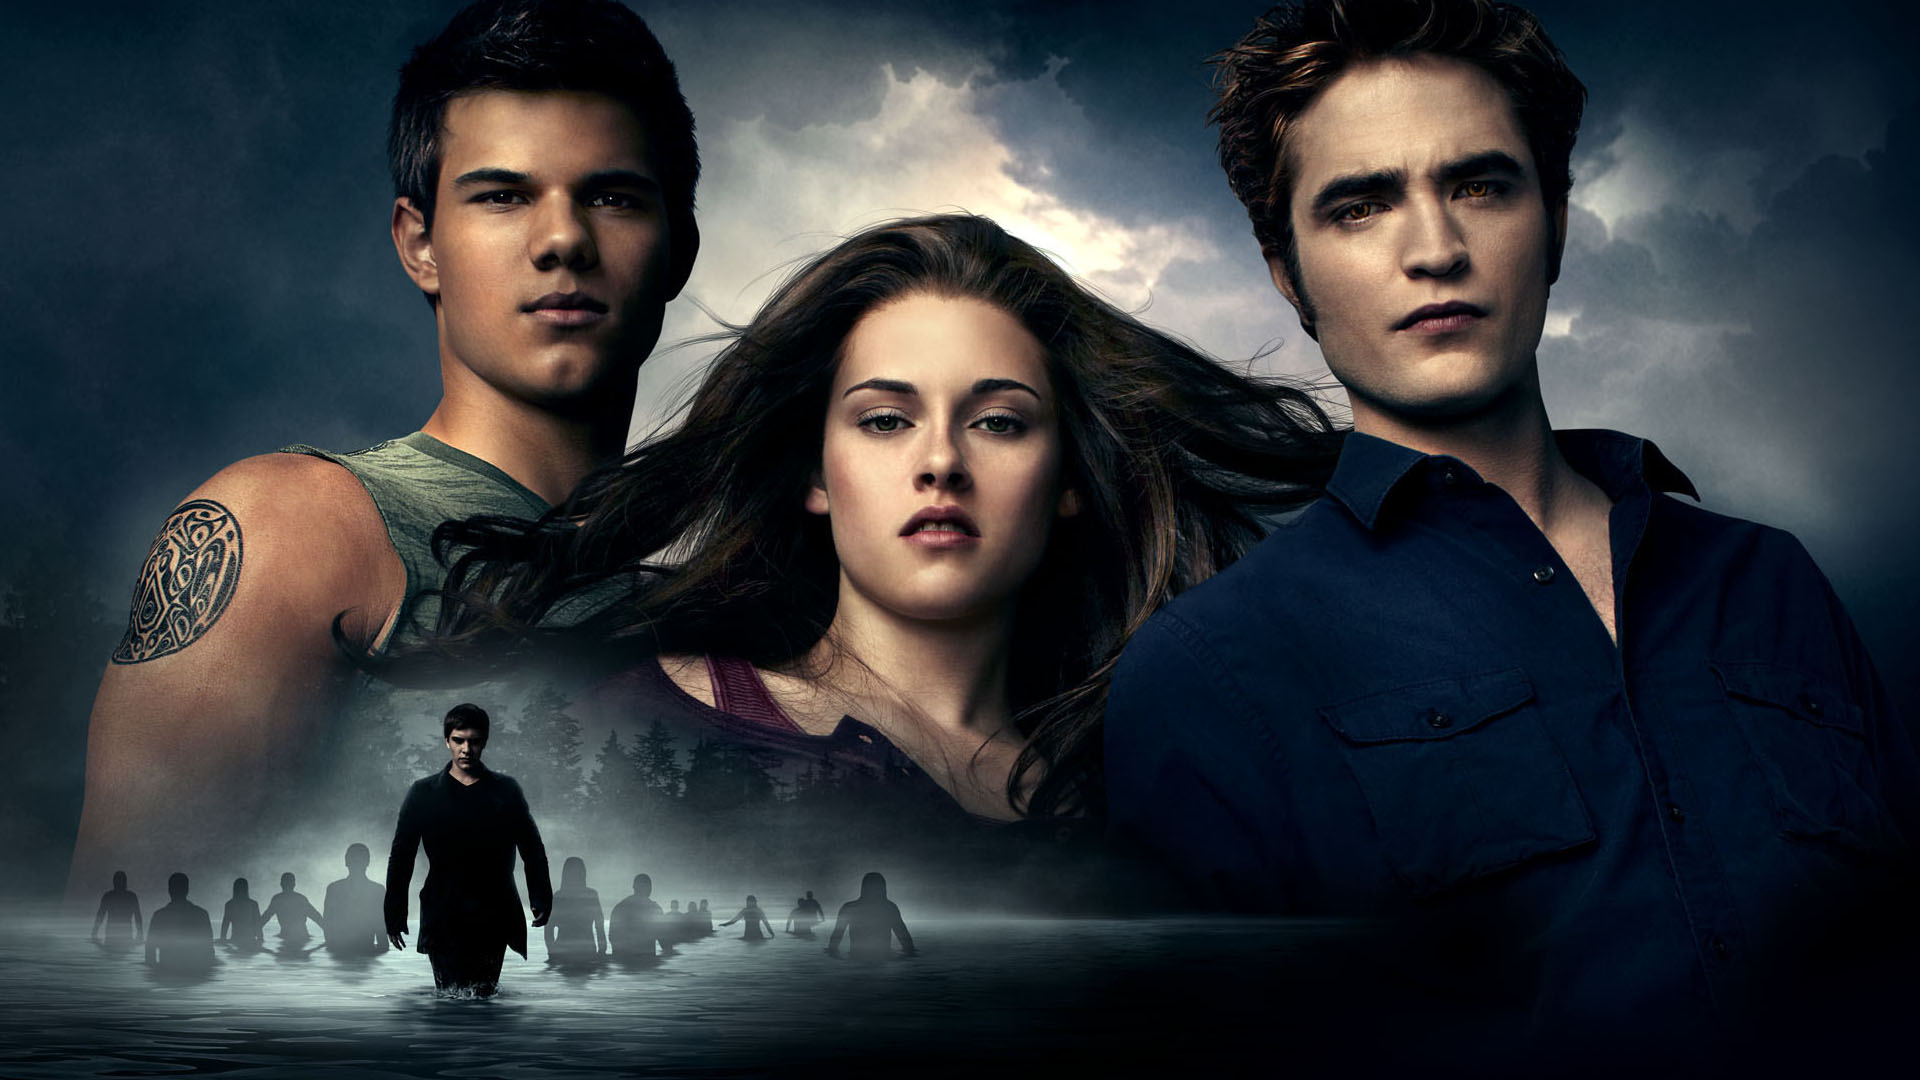 The Twilight Saga: Eclipse Wallpapers